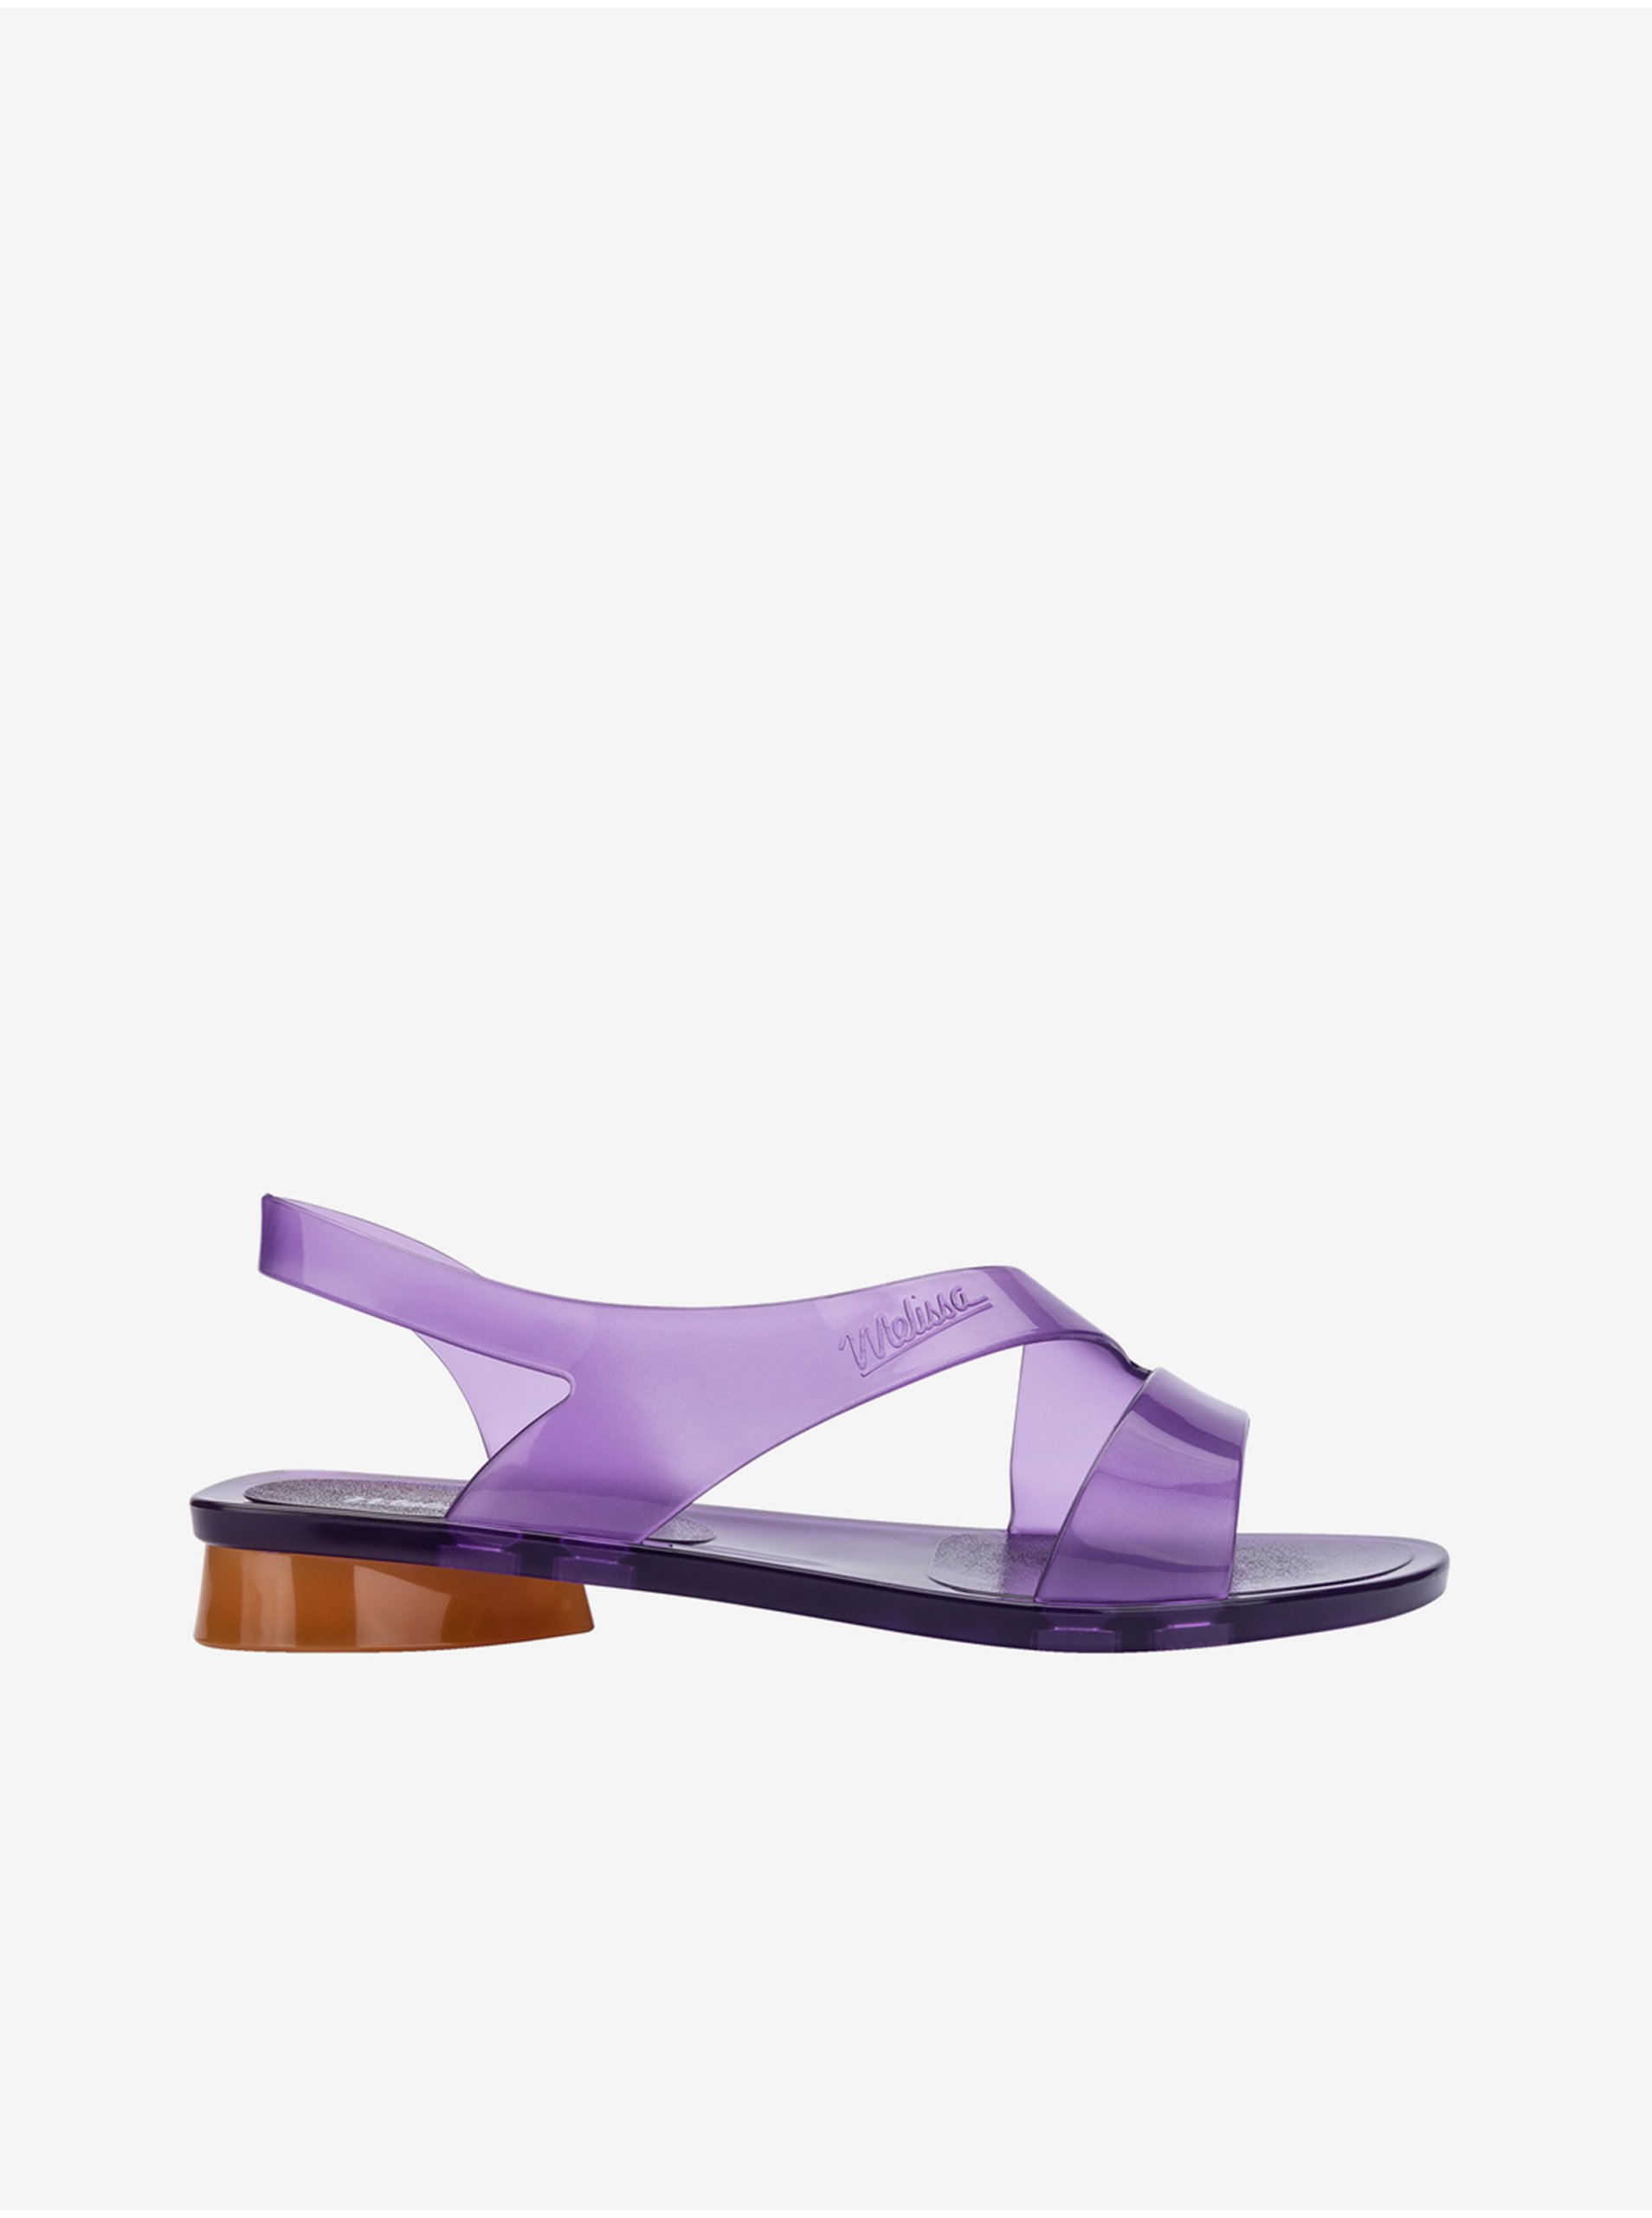 E-shop Sandále pre ženy Melissa - fialová